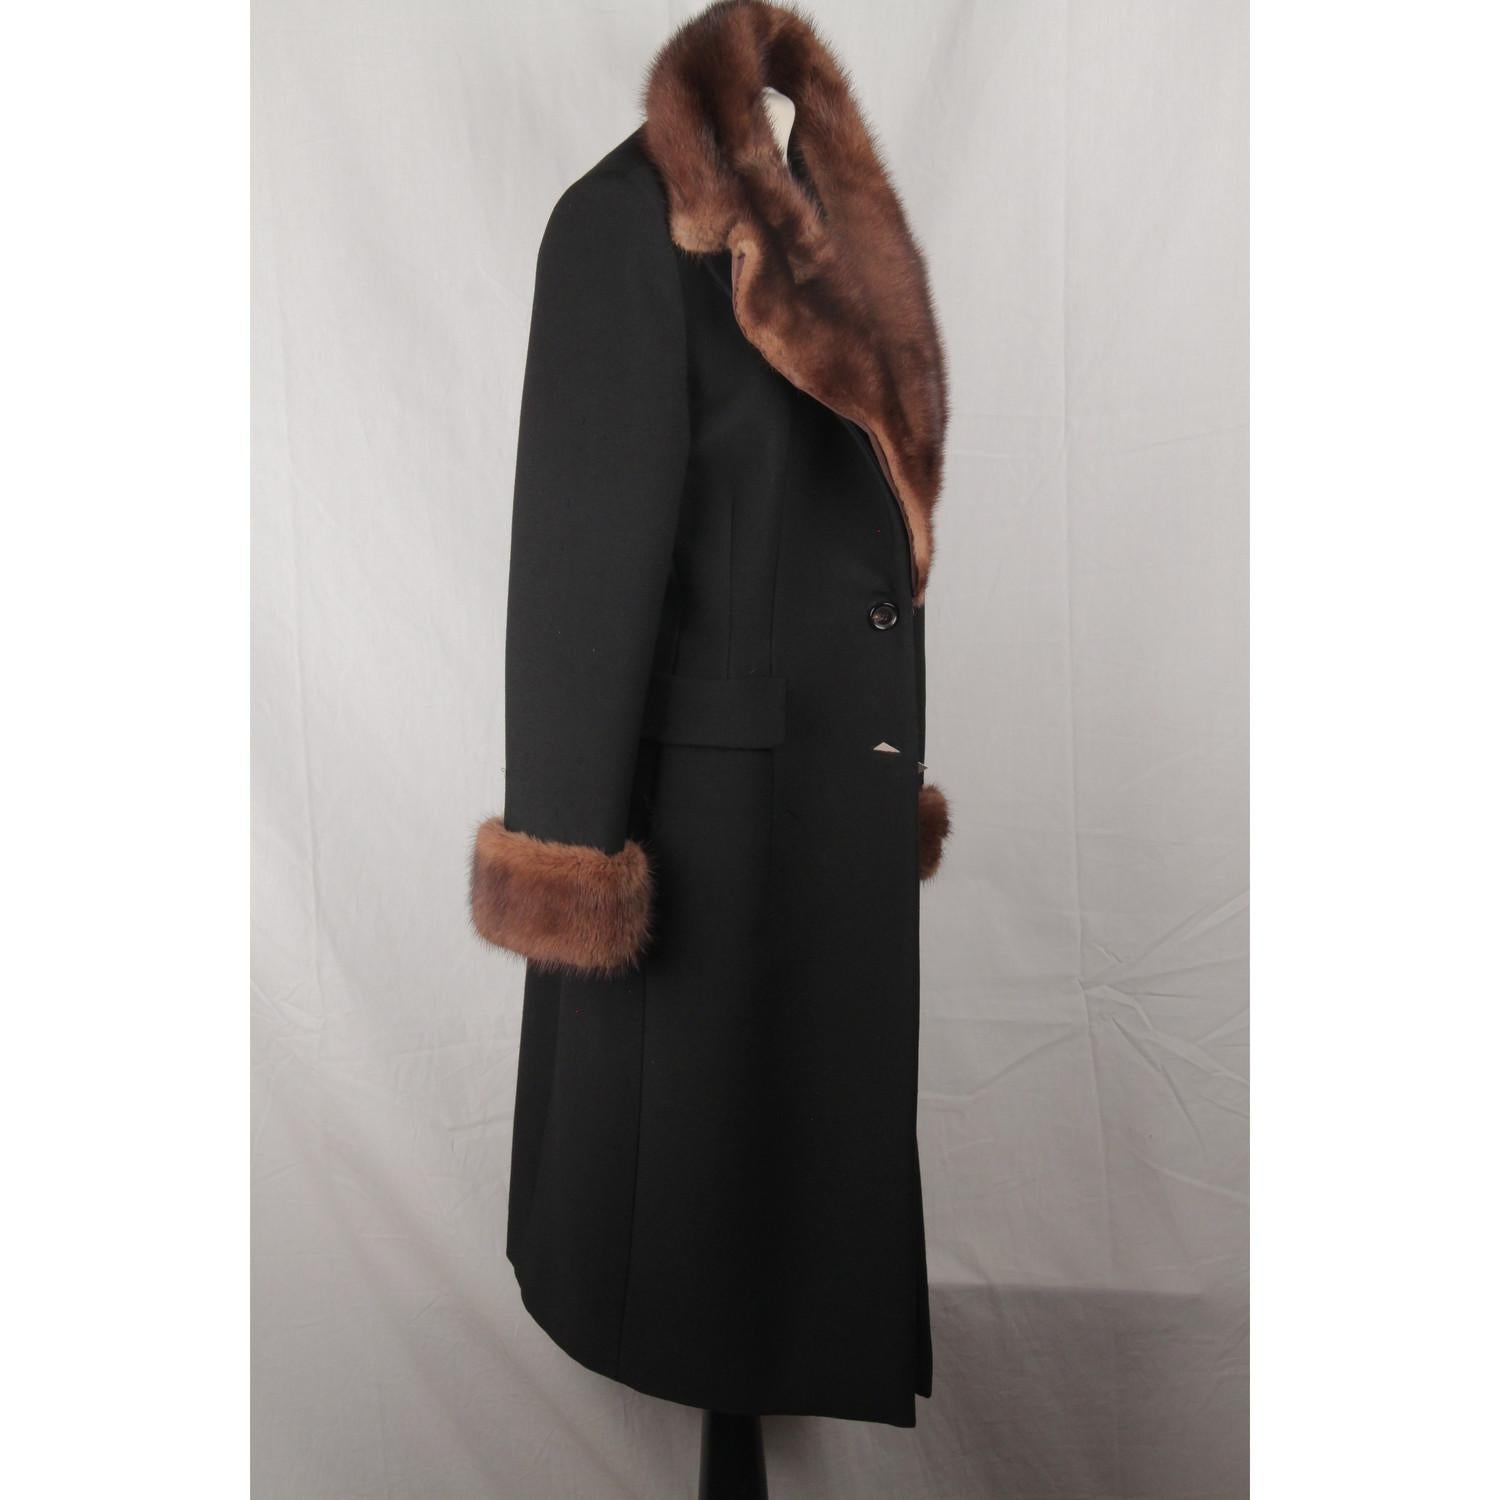 Women's Les Copains Black Wool Tailored Coat with Mink Fur Trim Size 44